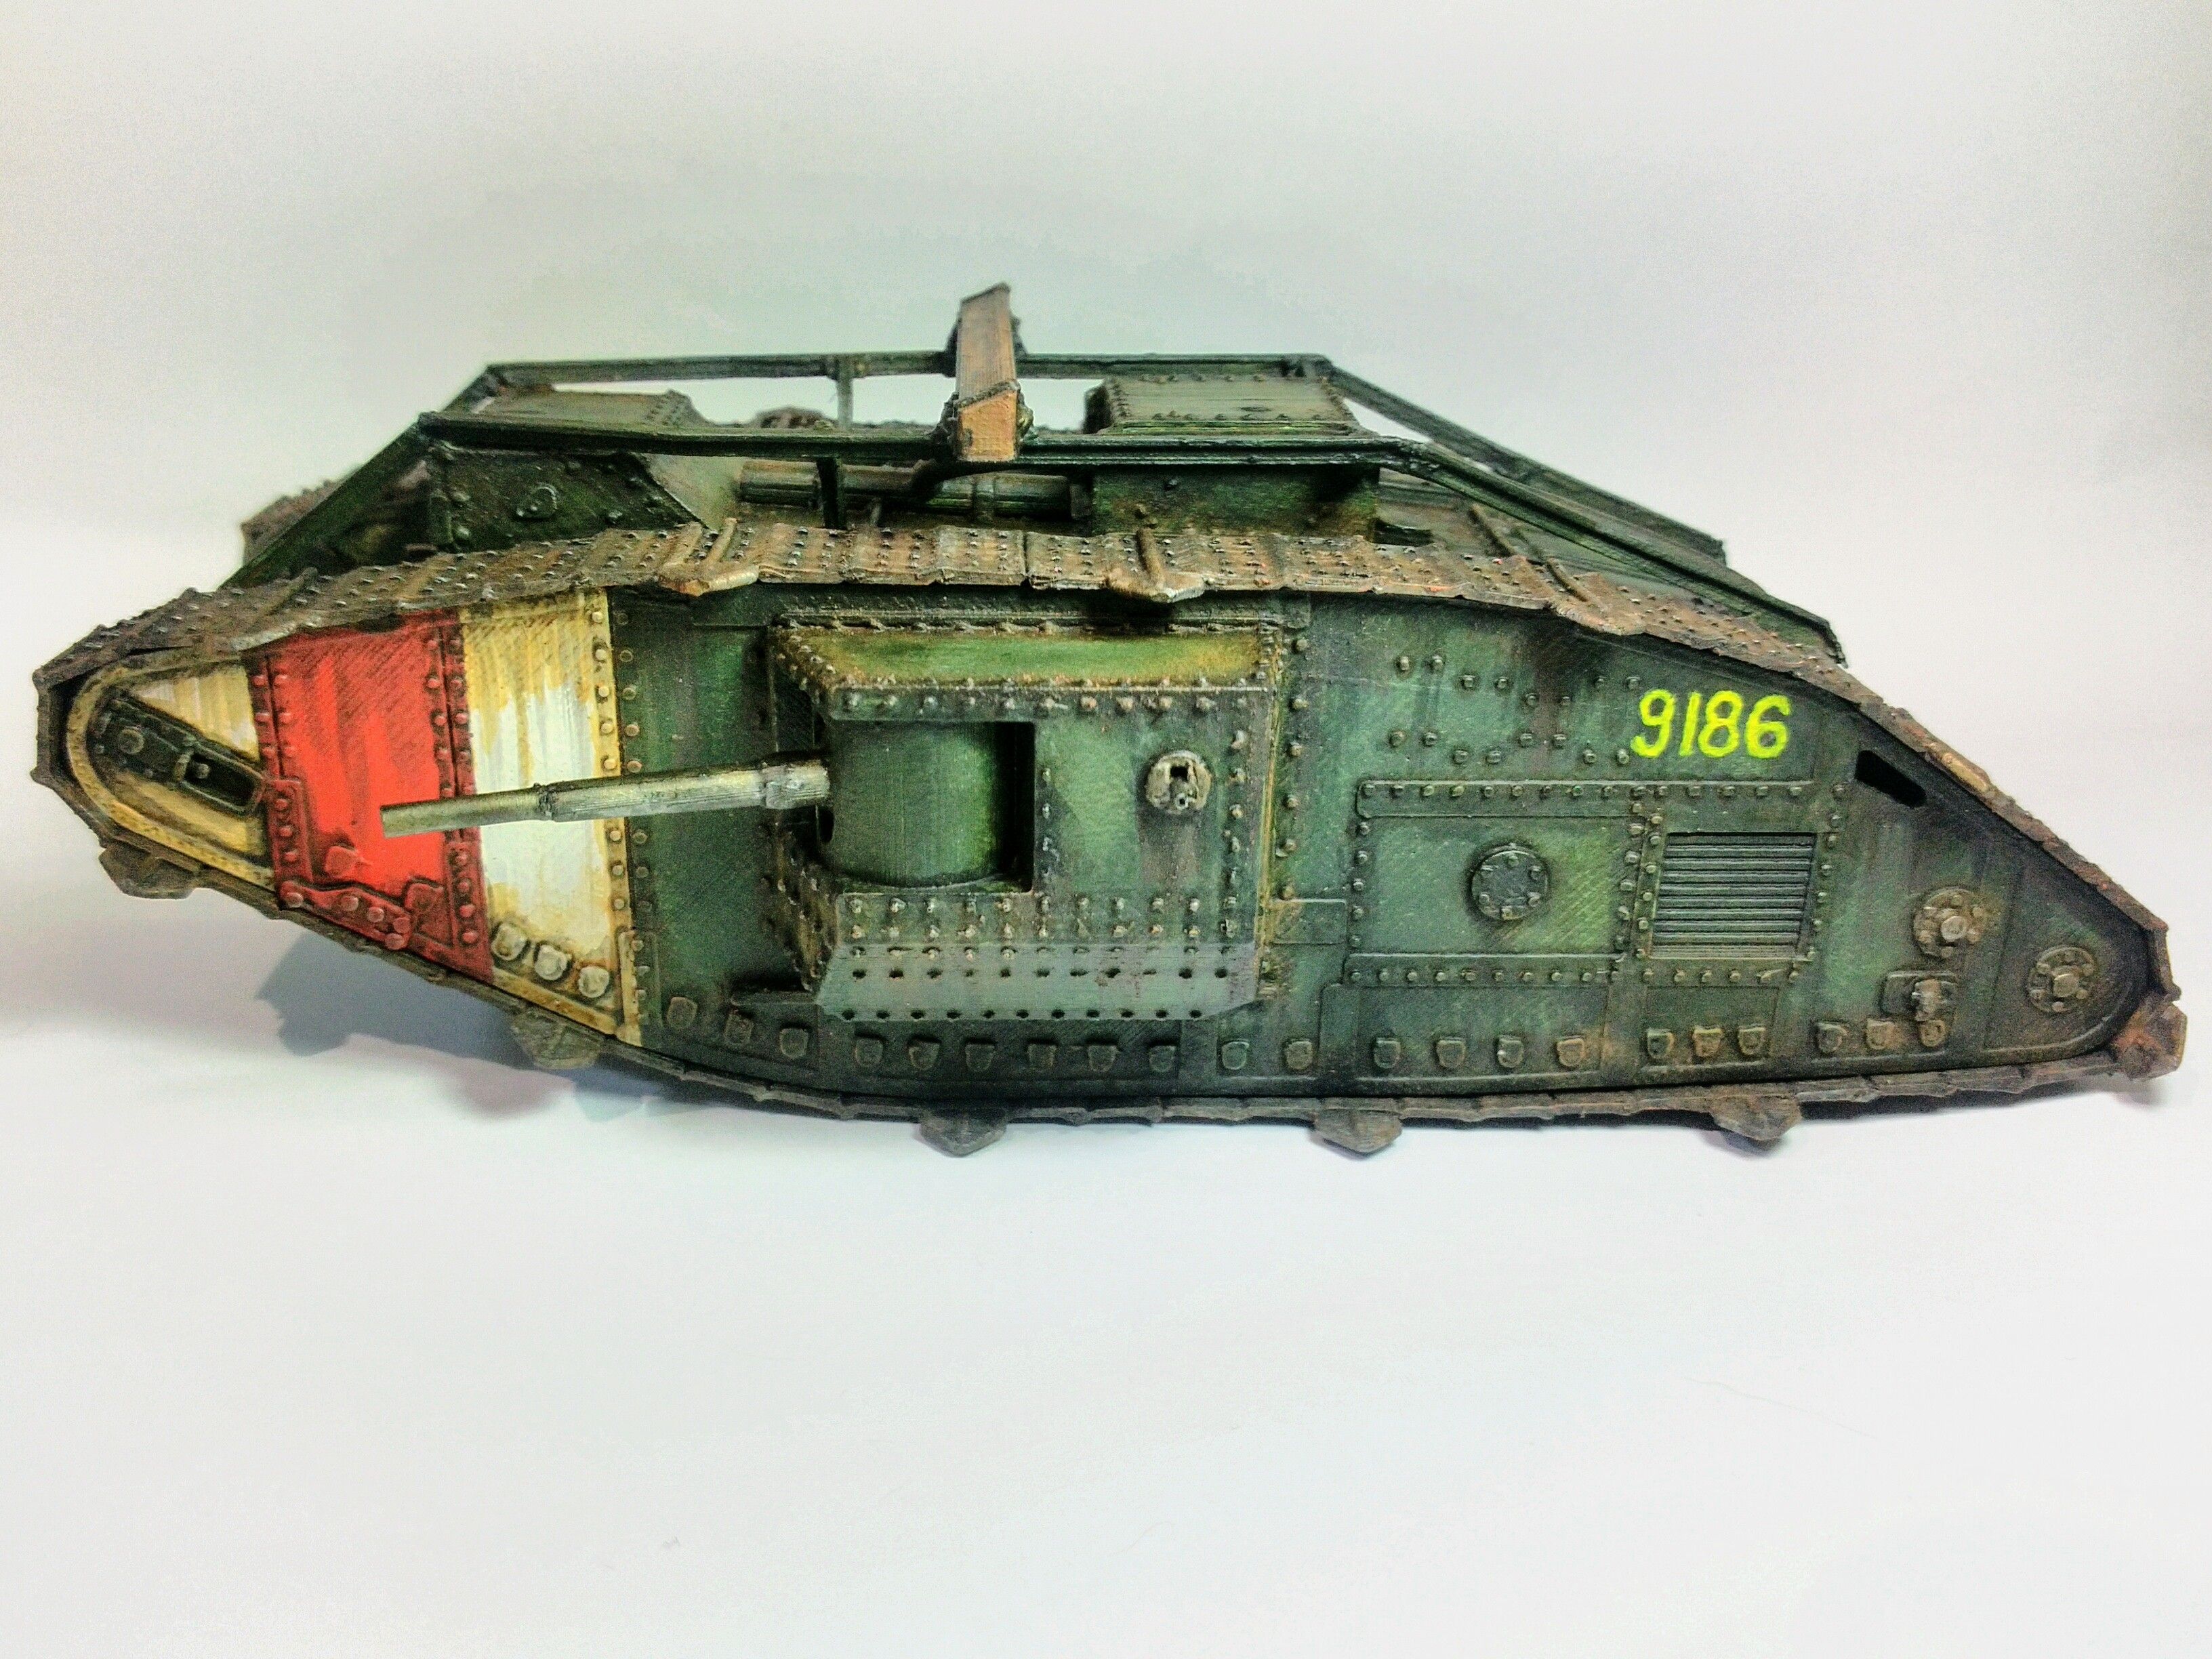 3D Print of the Mark V Landship tank from Battlefield 1